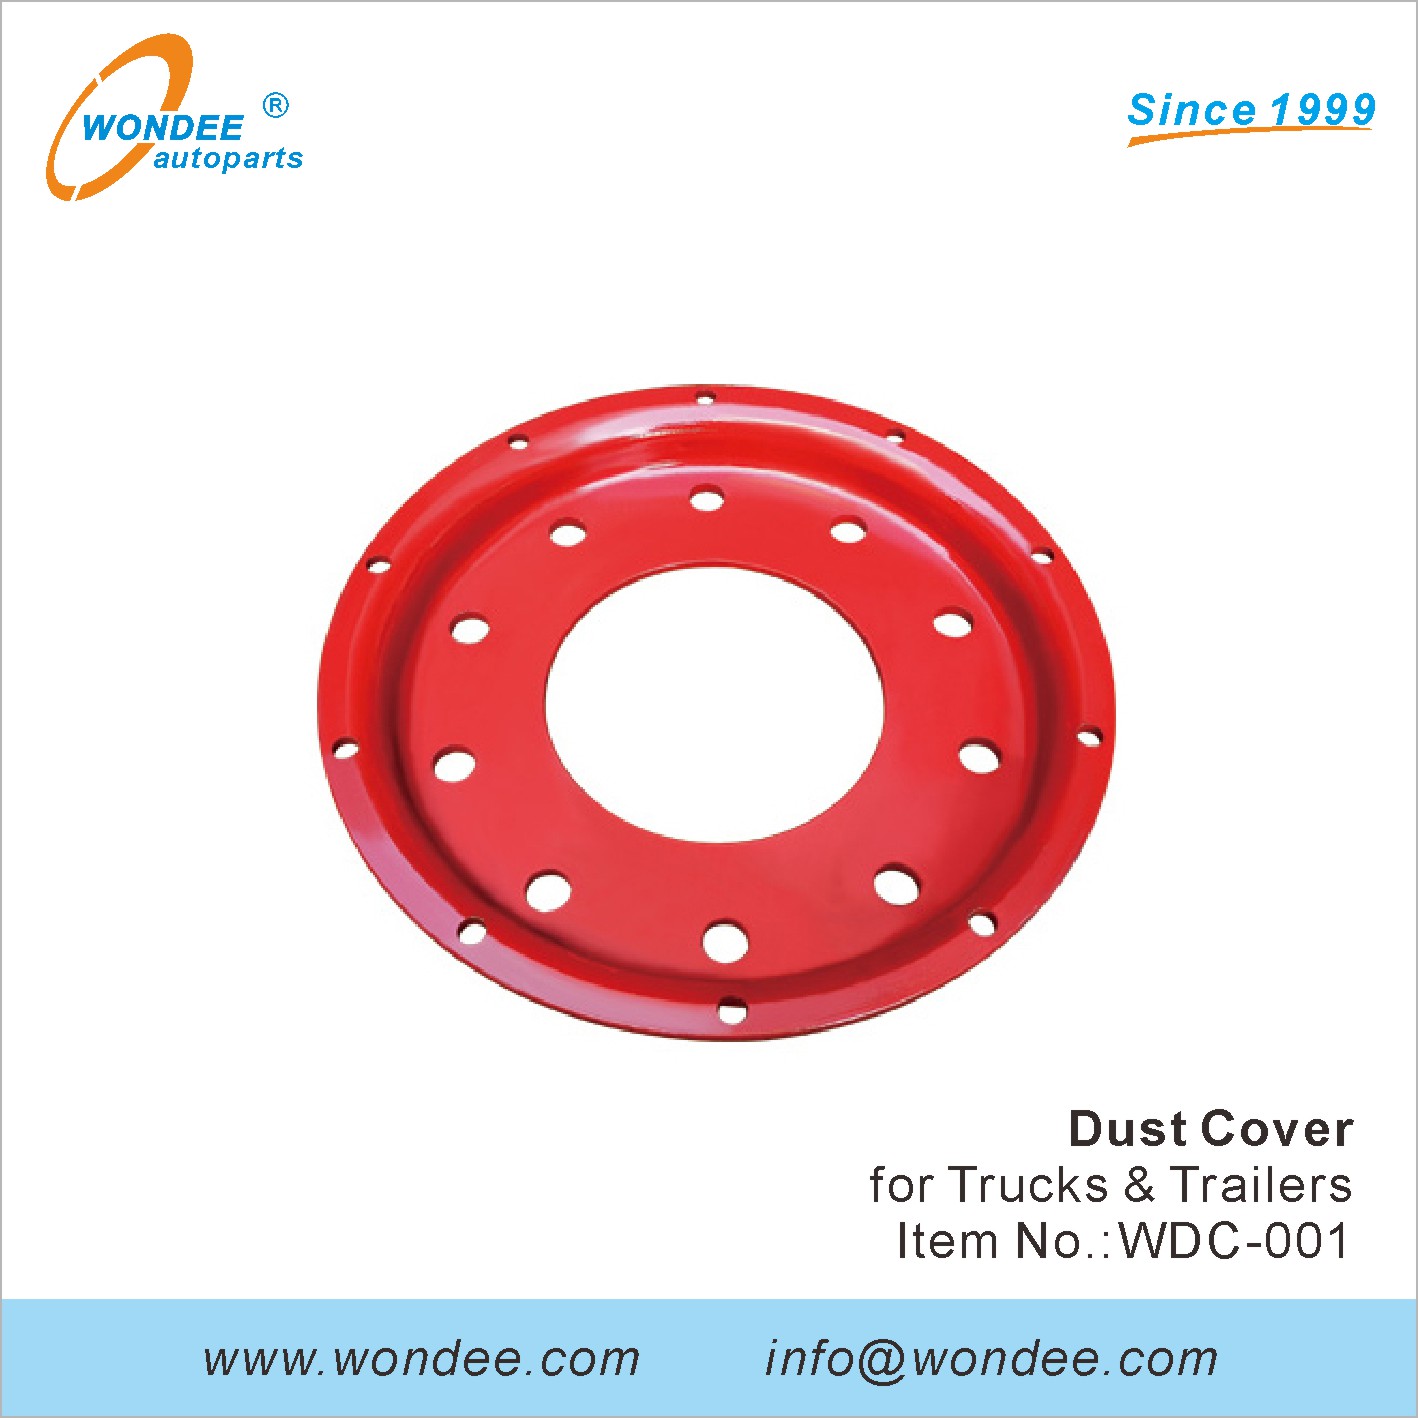 WONDEE dust cover (1)